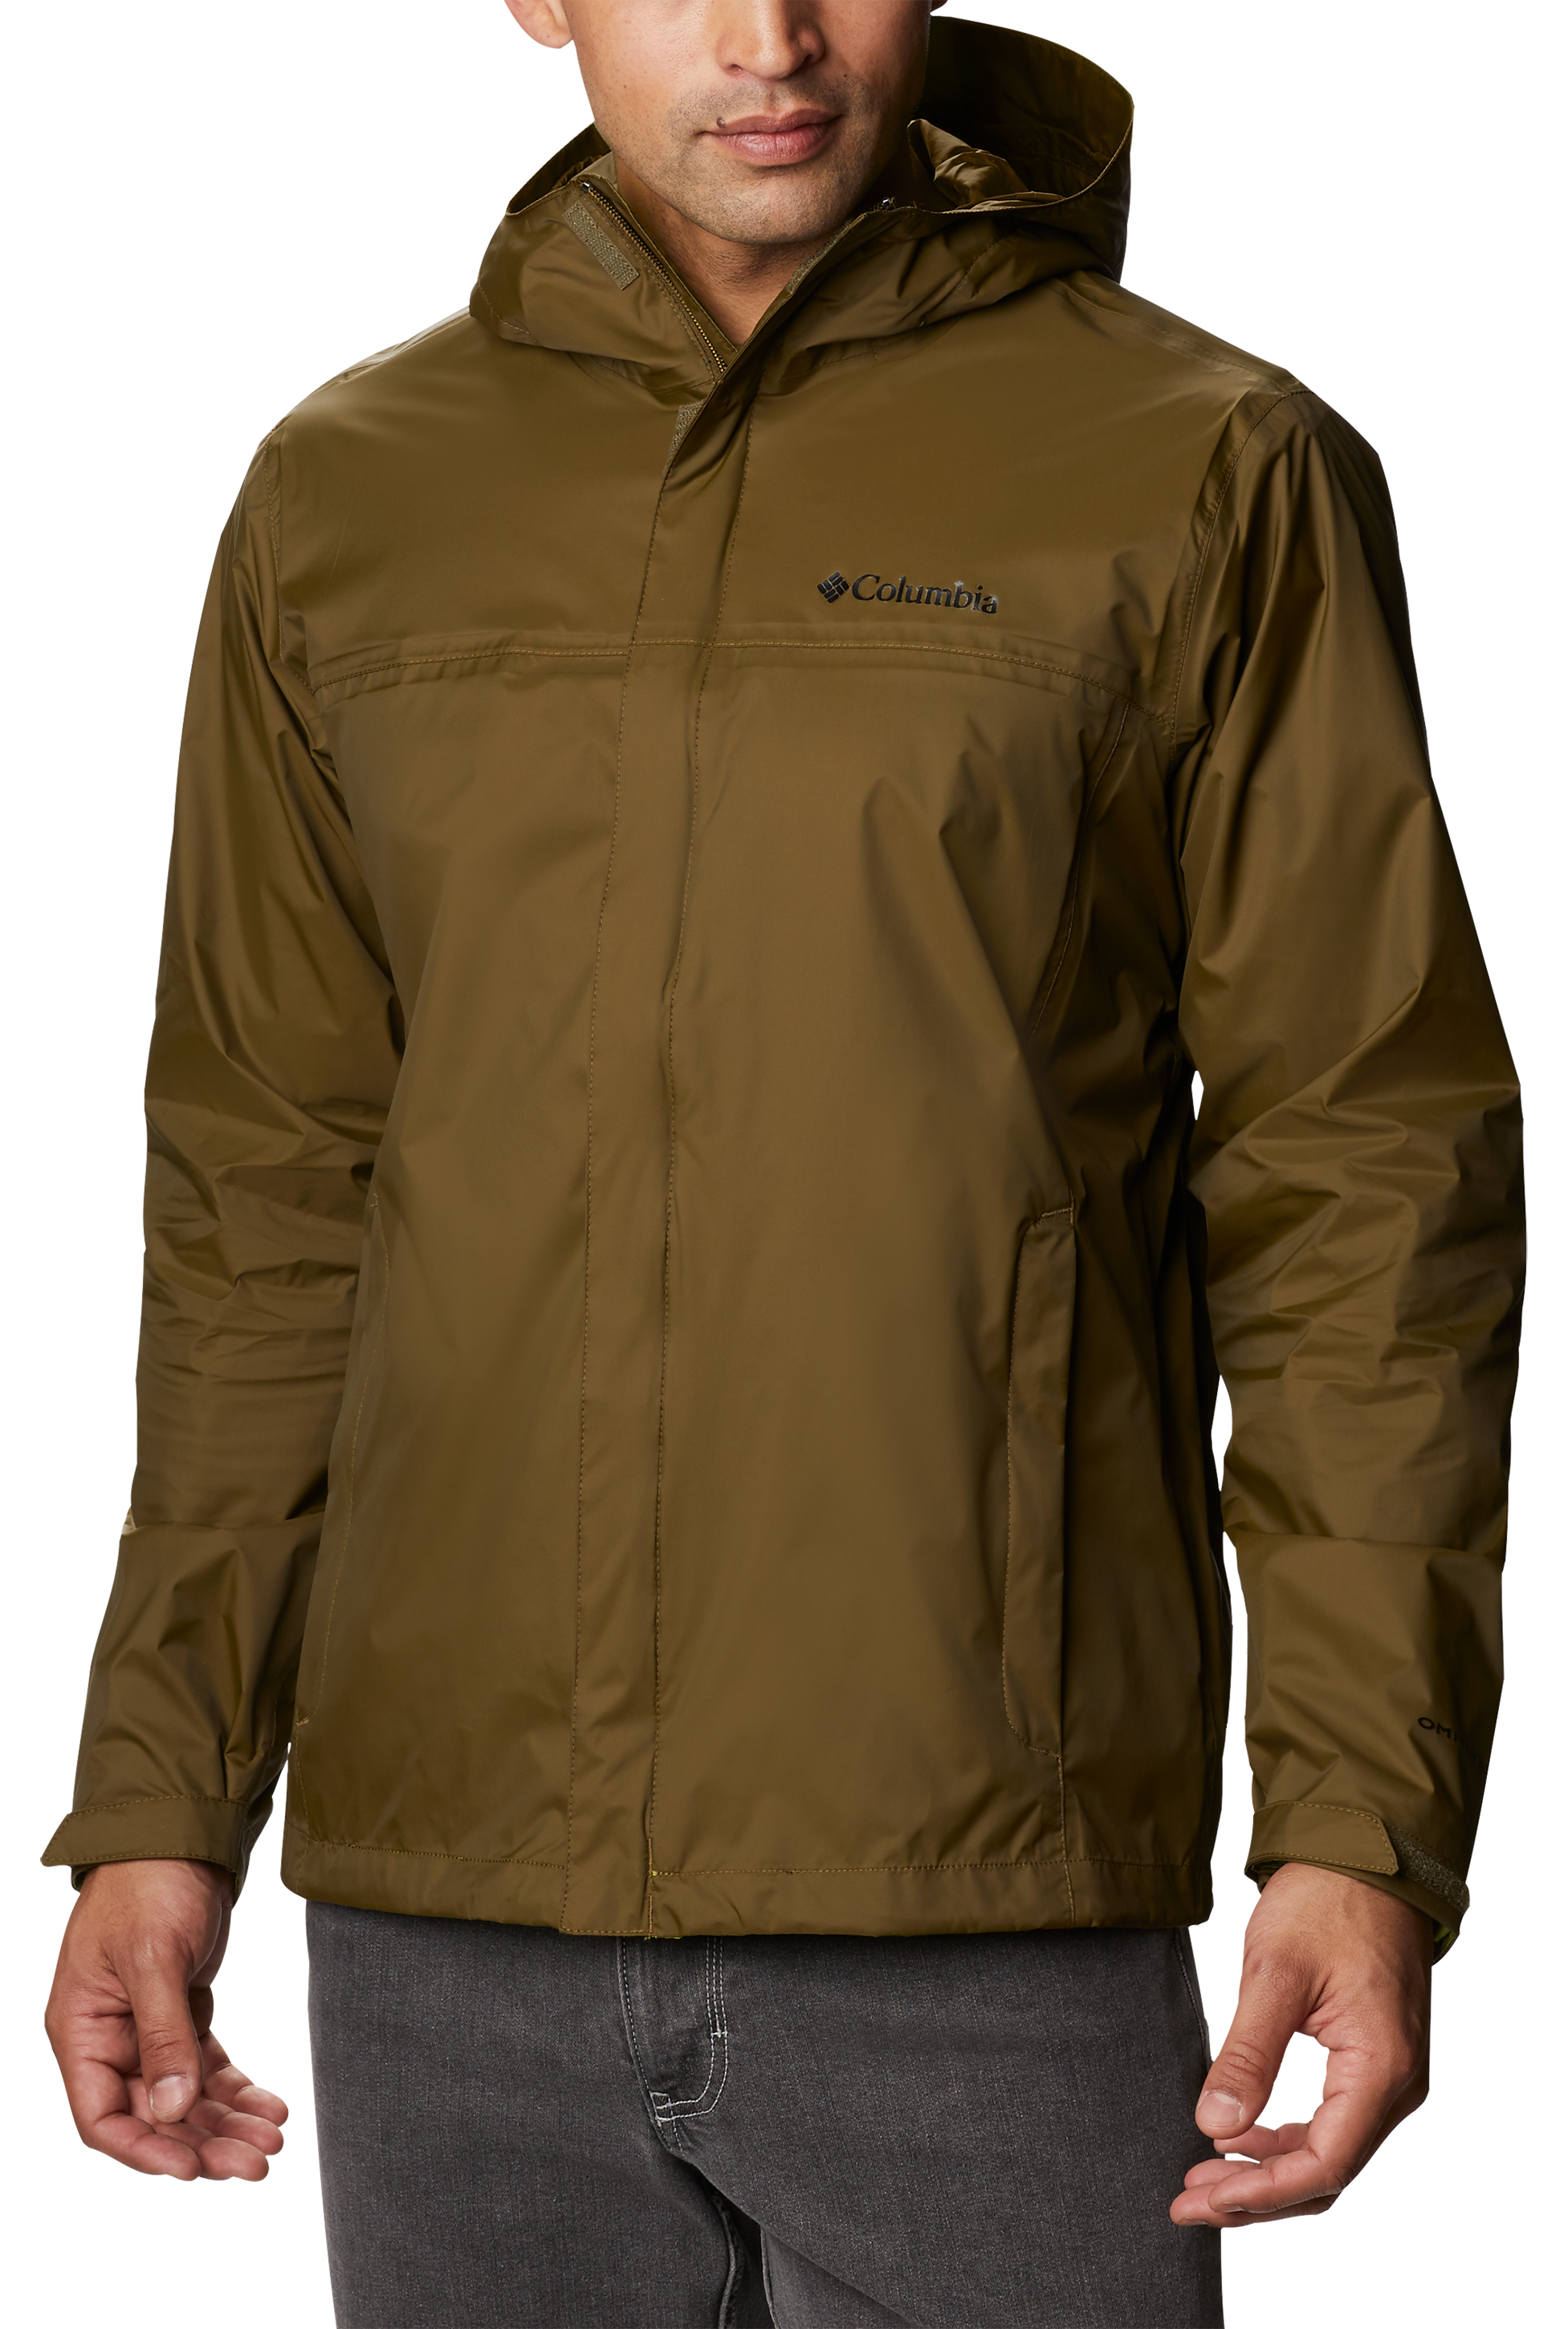 Columbia Watertight II Jacket for Men - New Olive - S